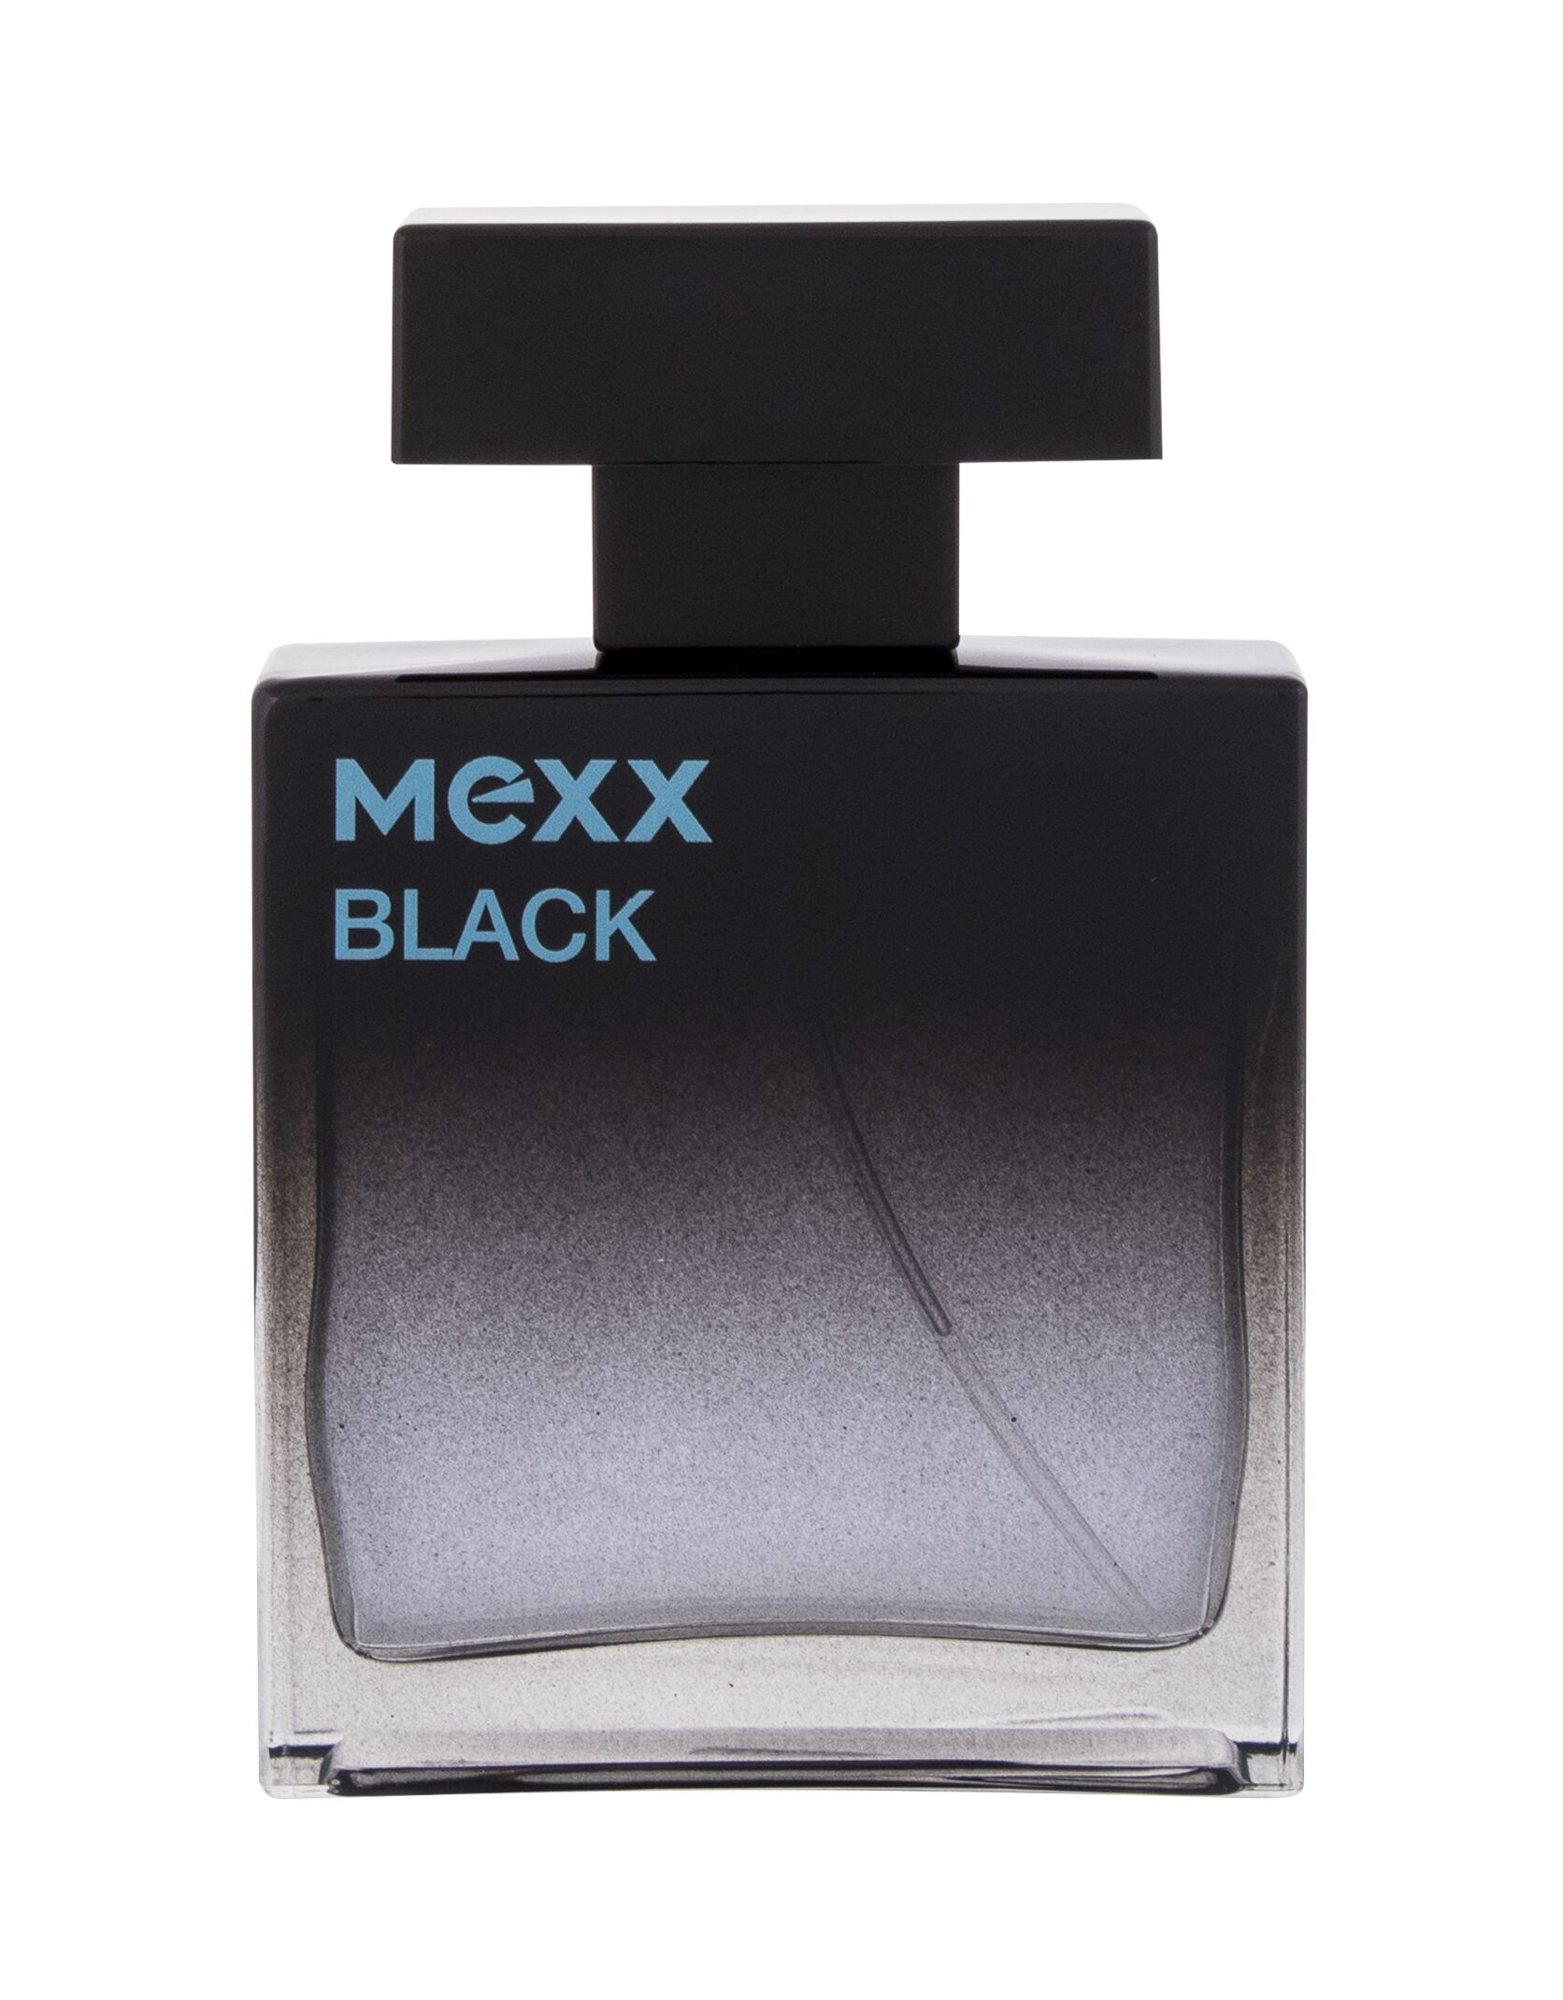 Mexx Black, EDP 50ml